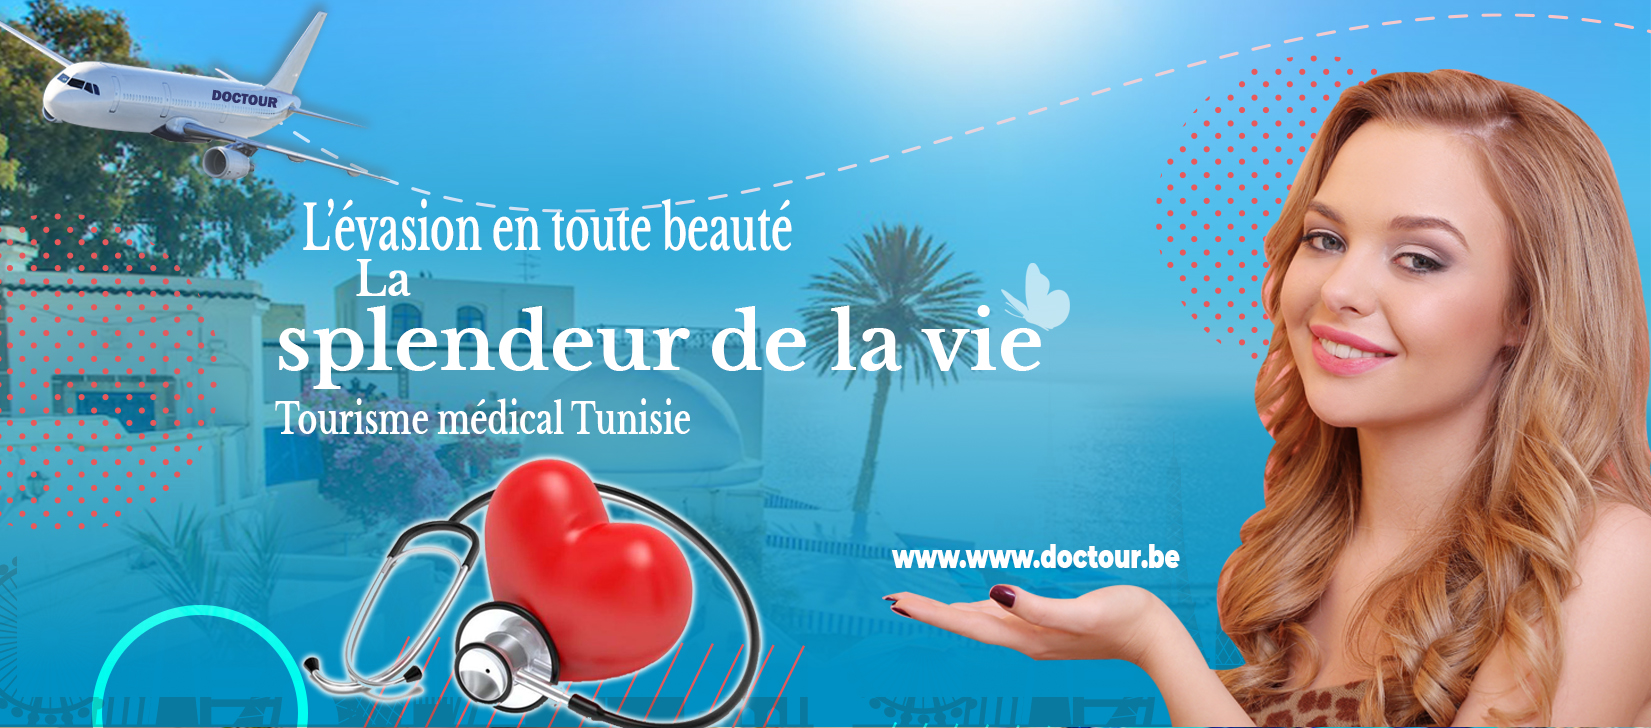 chirurgie esthétique tunisie